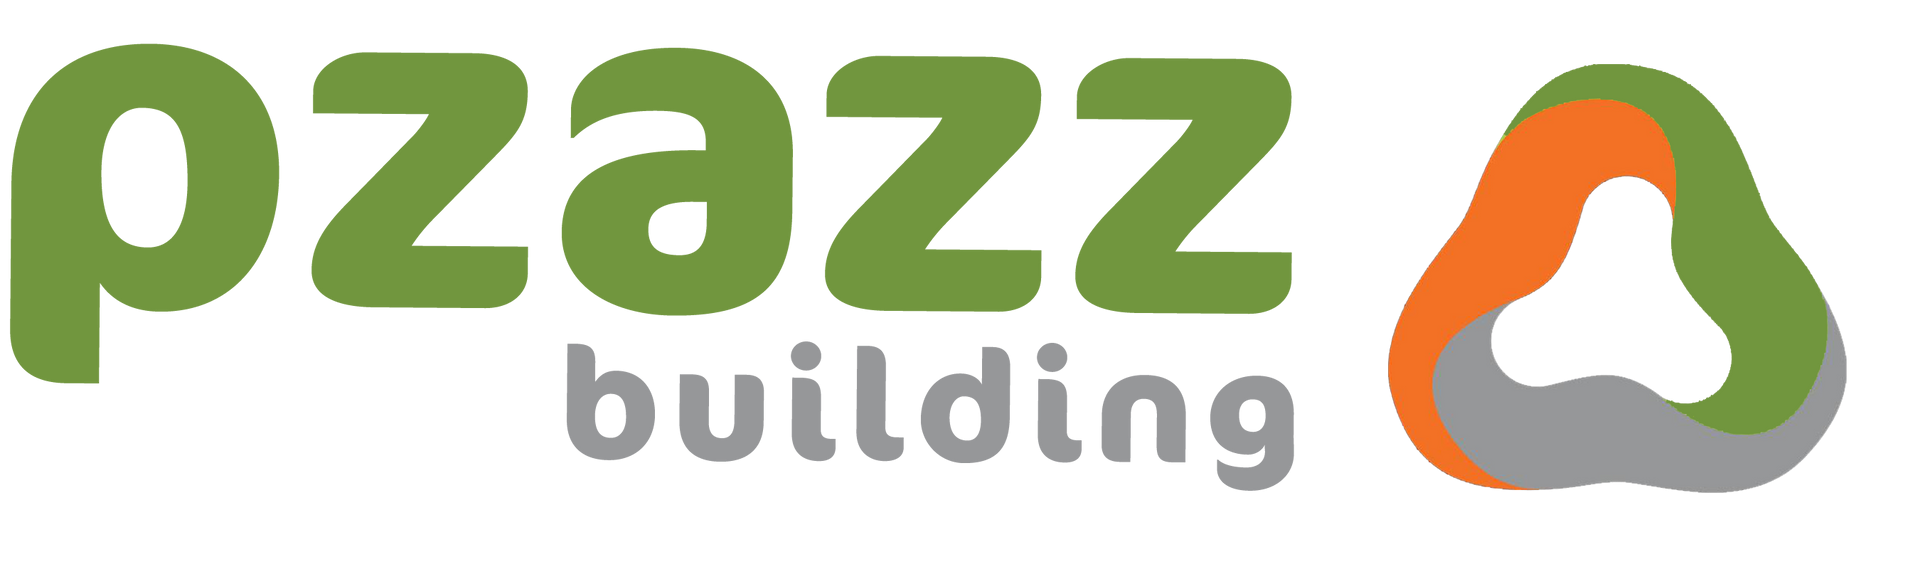 Pzazz Building Renovation Franchise